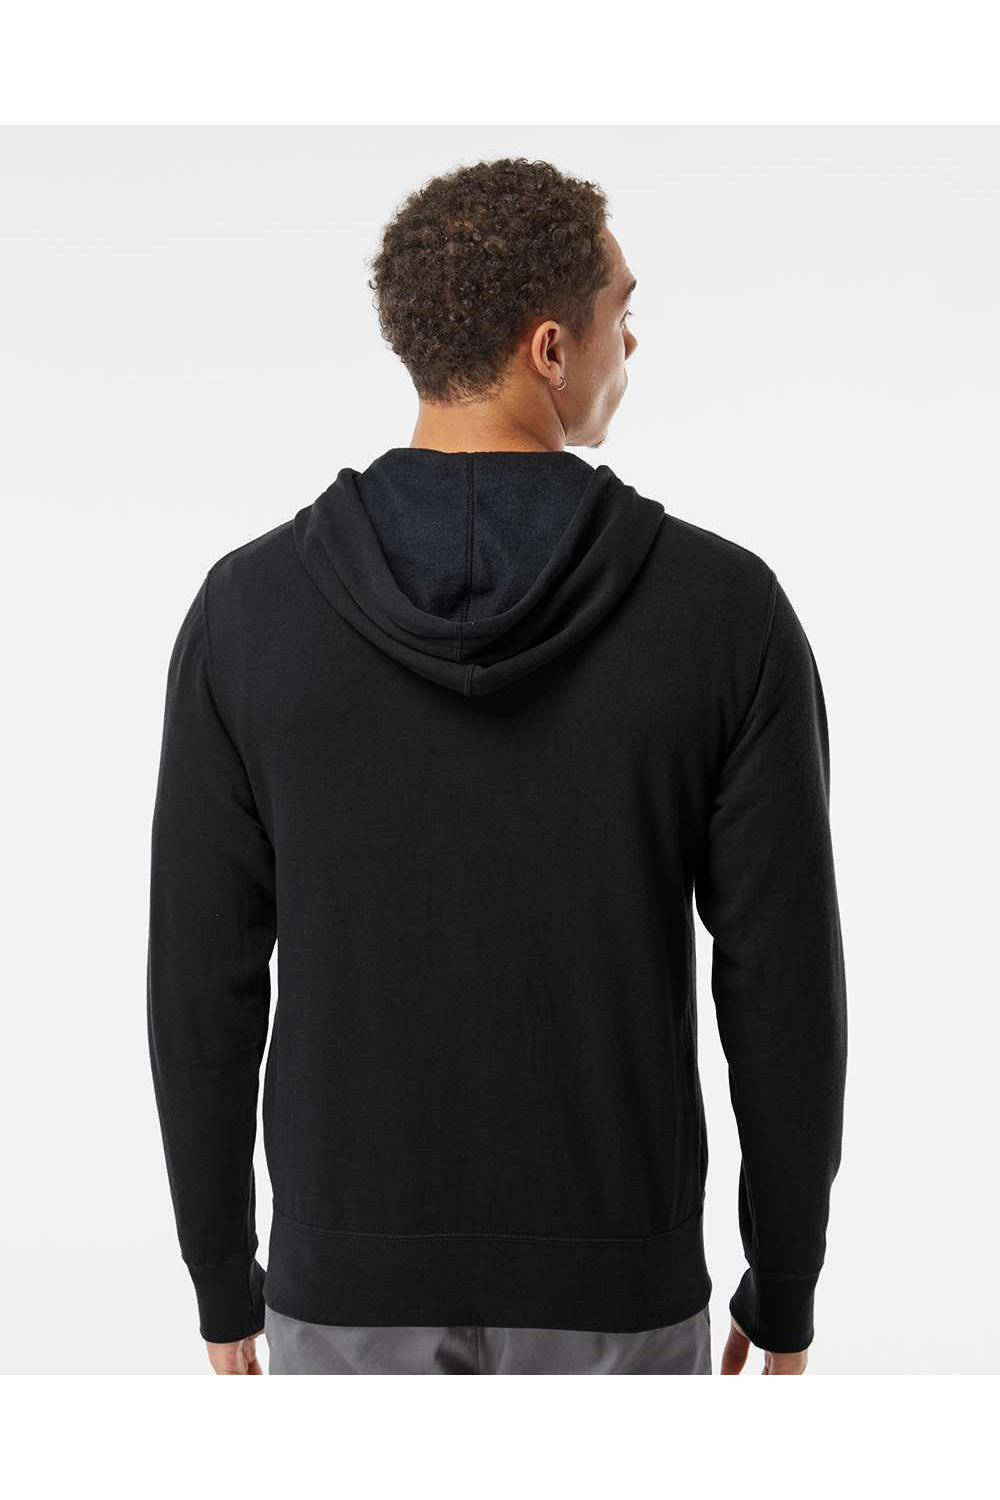 Independent Trading Co. AFX90UNZ Mens Full Zip Hooded Sweatshirt Hoodie Black Model Back